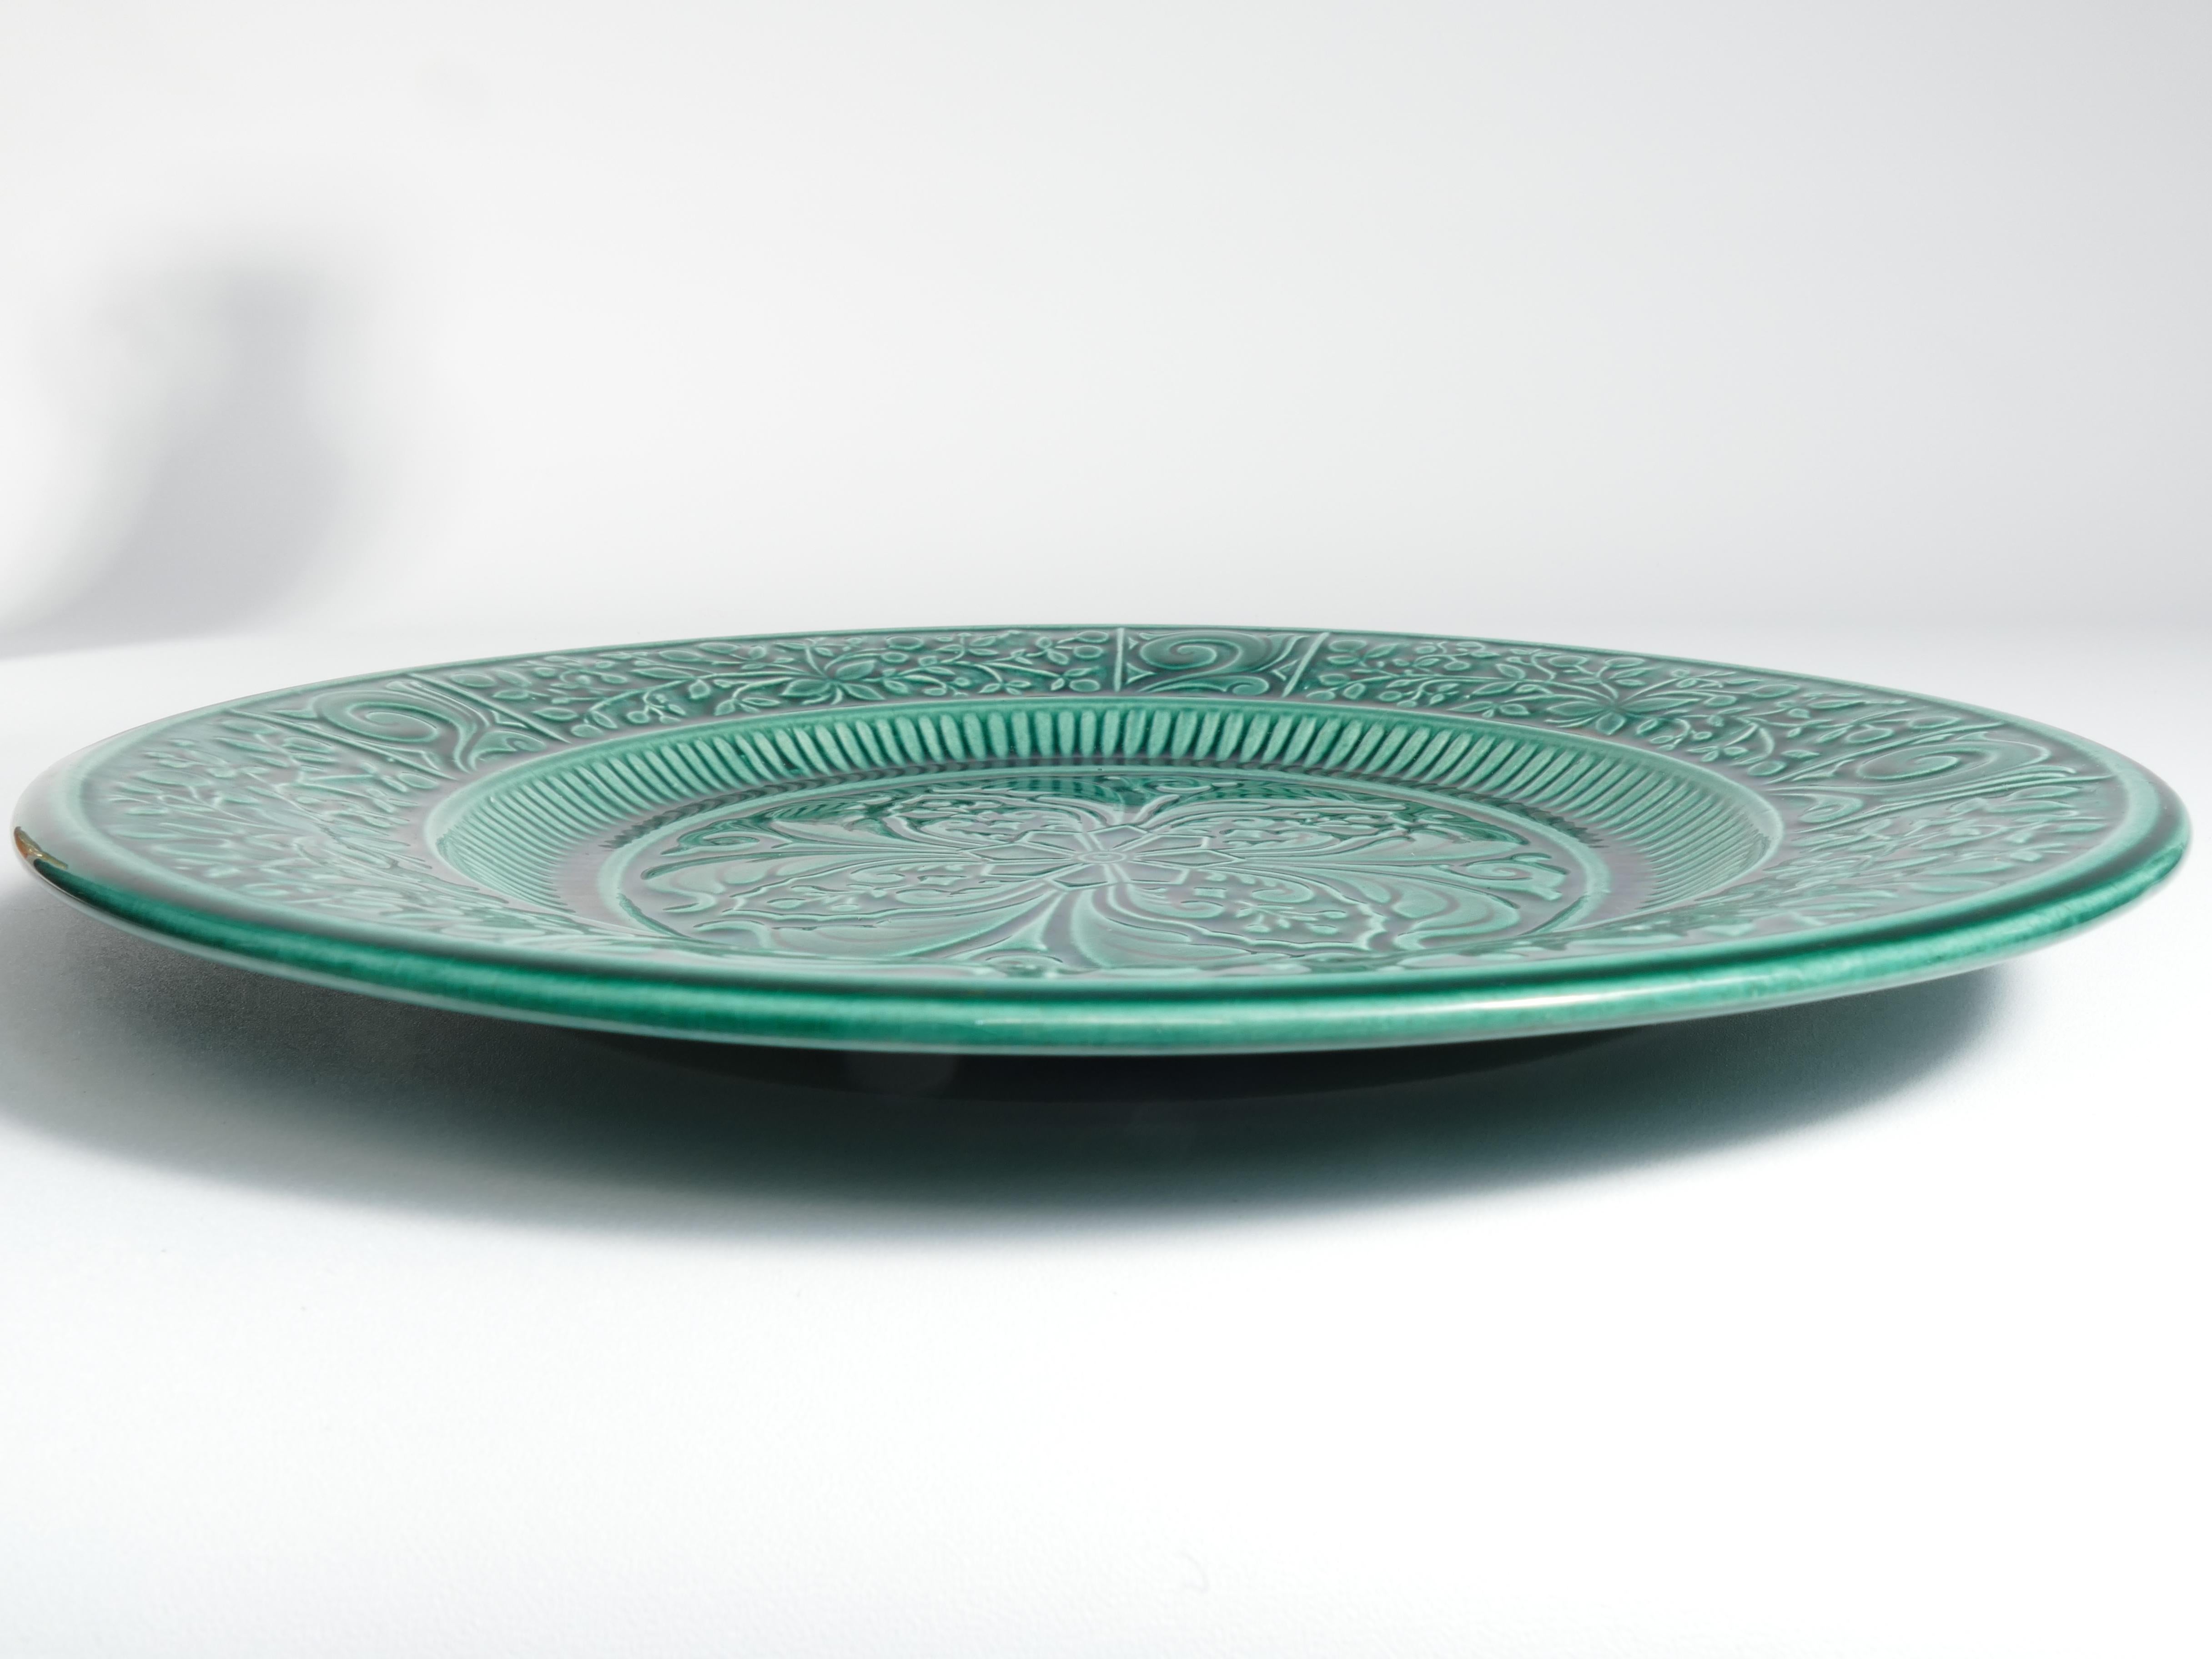 Large Scandinavian Modern Green Plate, Arol Ceramic, Halden Norway, 1950s For Sale 4